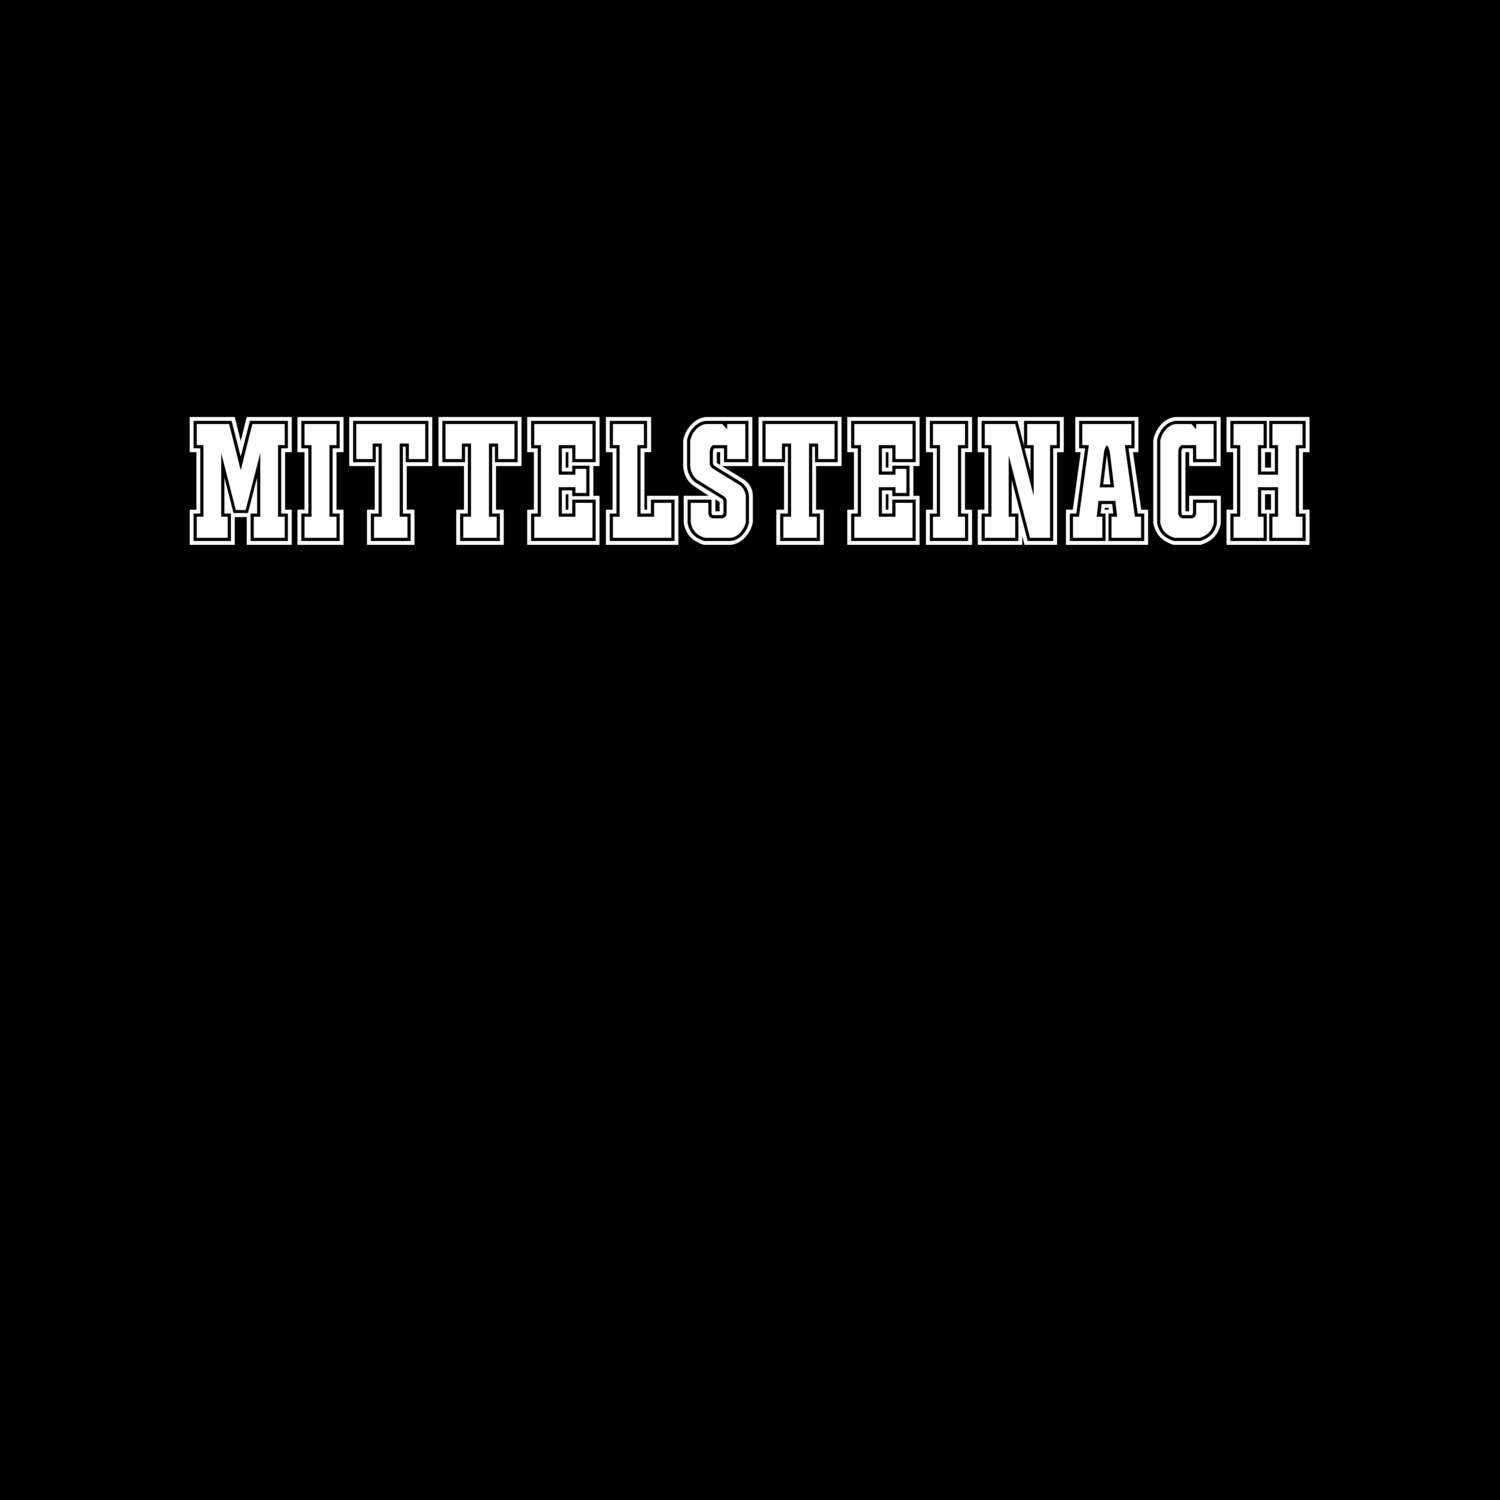 Mittelsteinach T-Shirt »Classic«